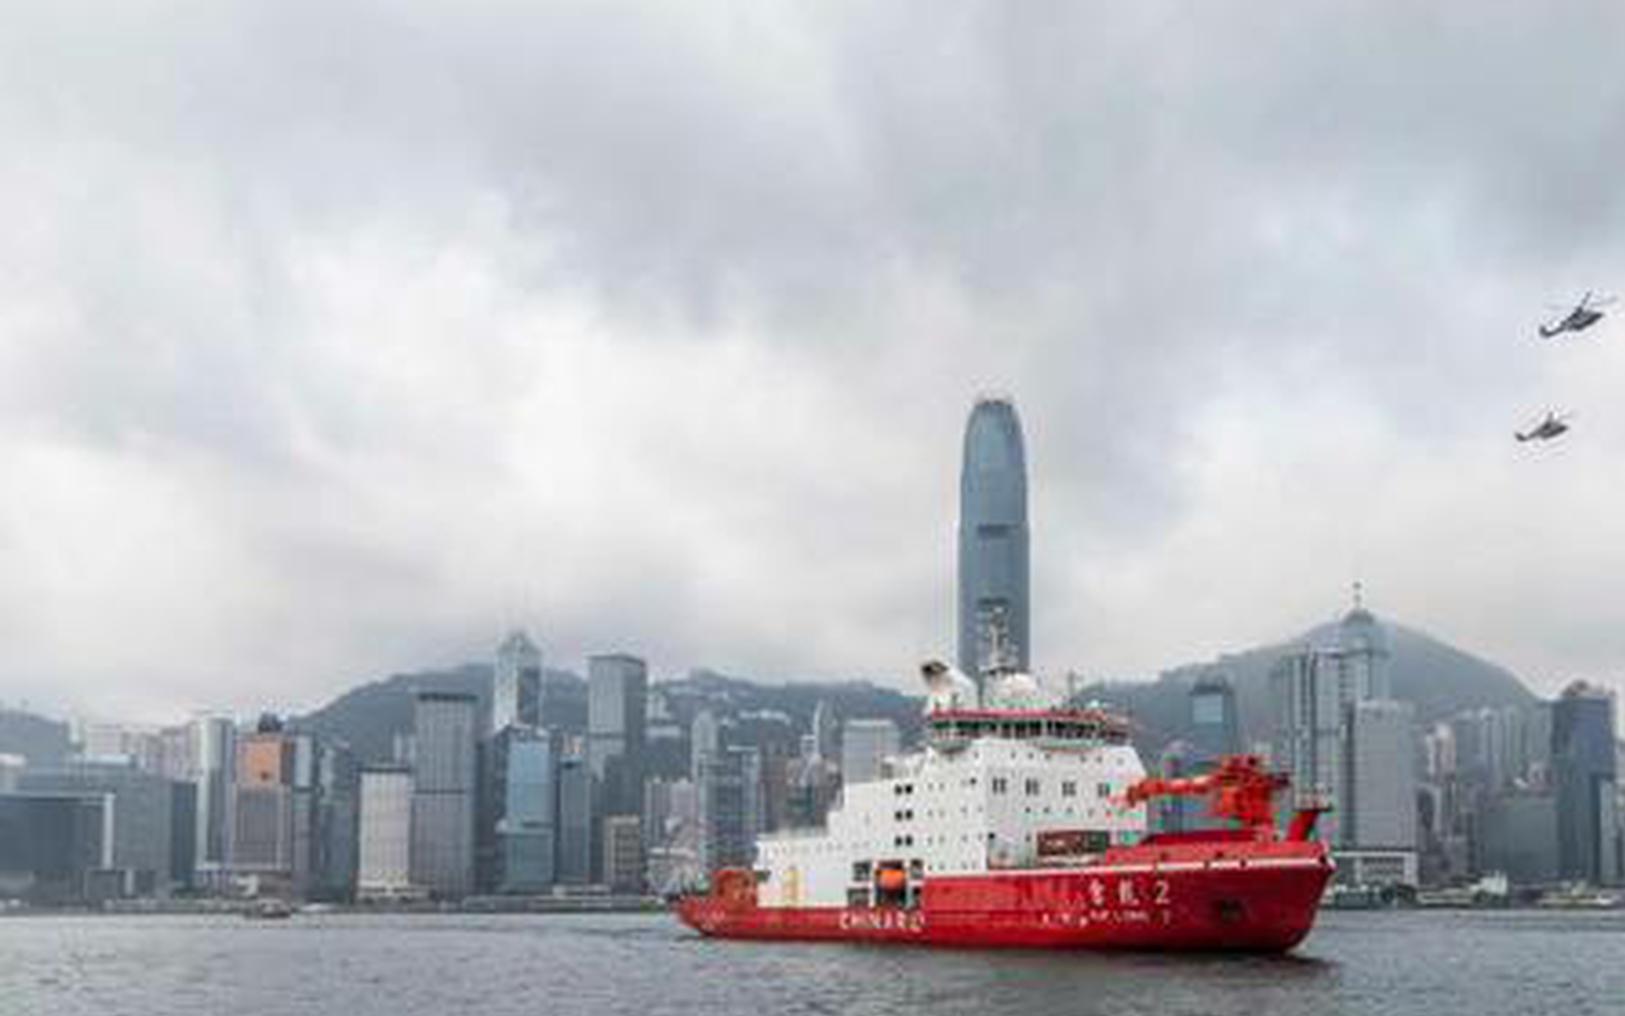 Polar icebreaker Xuelong 2 receives warm welcome in Hong Kong